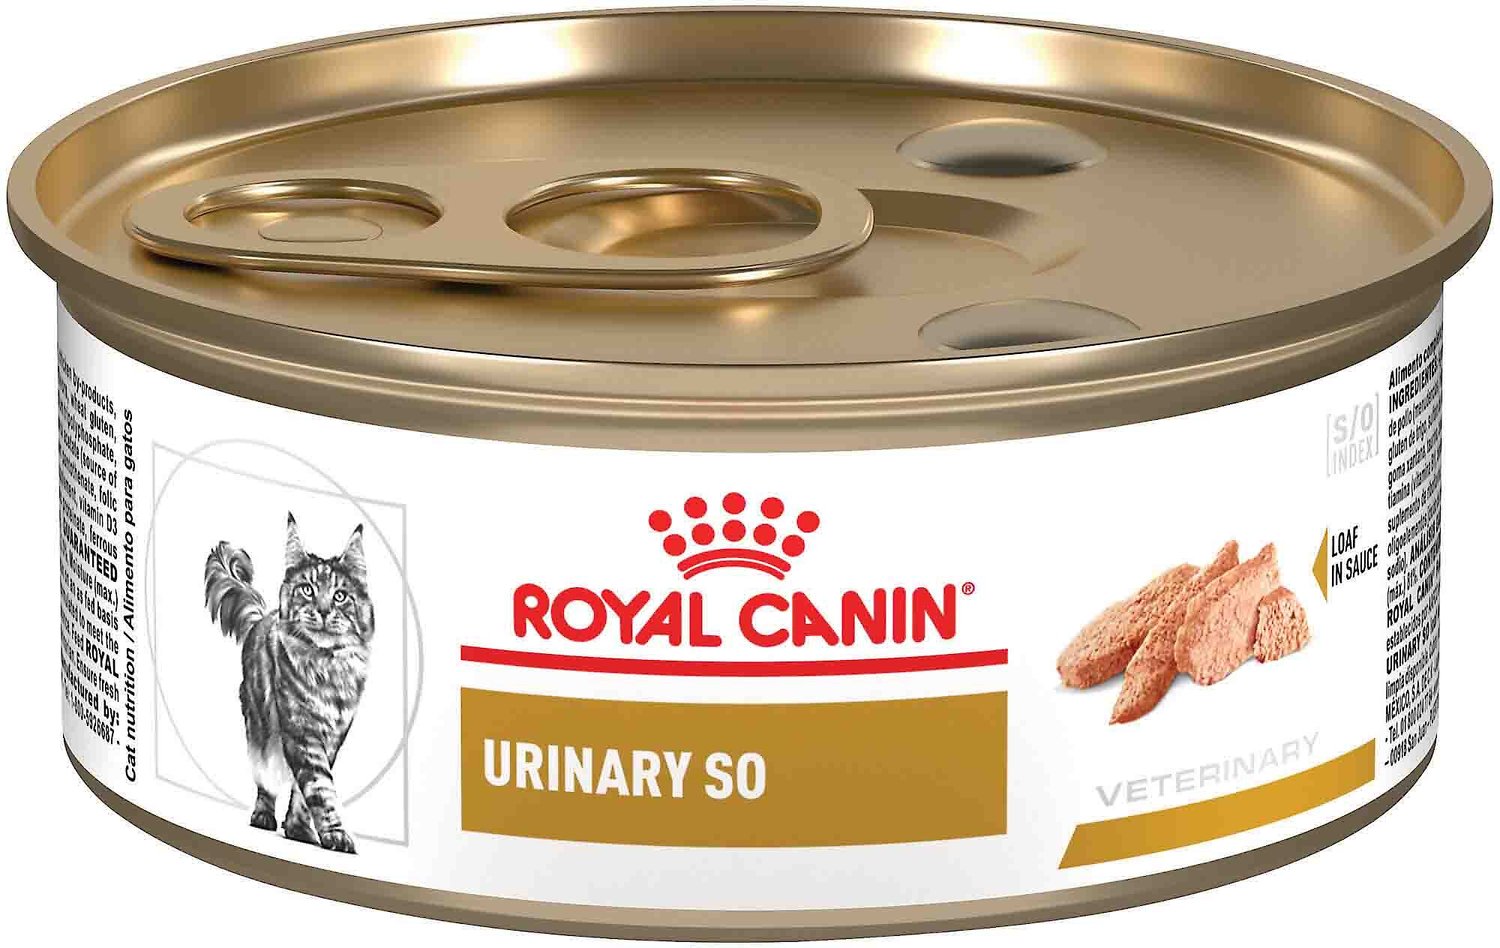 urinary so cat food